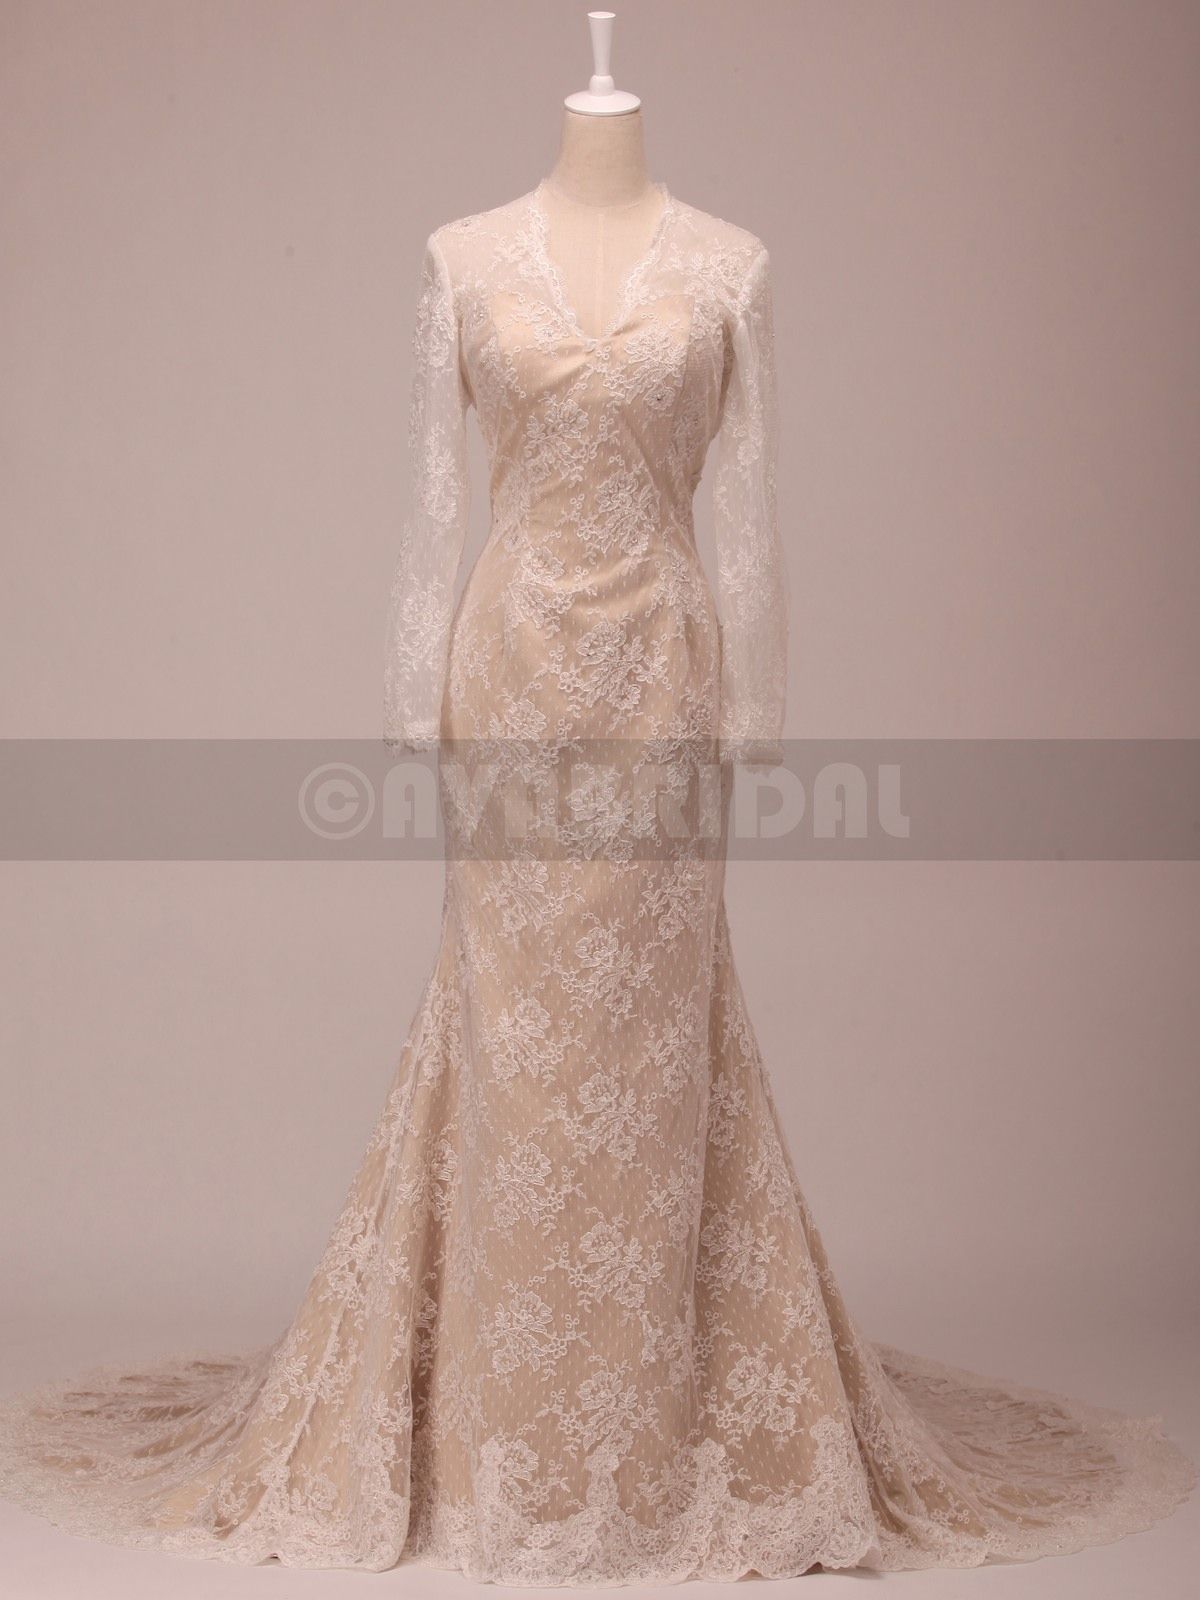 W784 Slim Aline Long Sleeved Vintage Look Lace Wedding Dress Size 14 